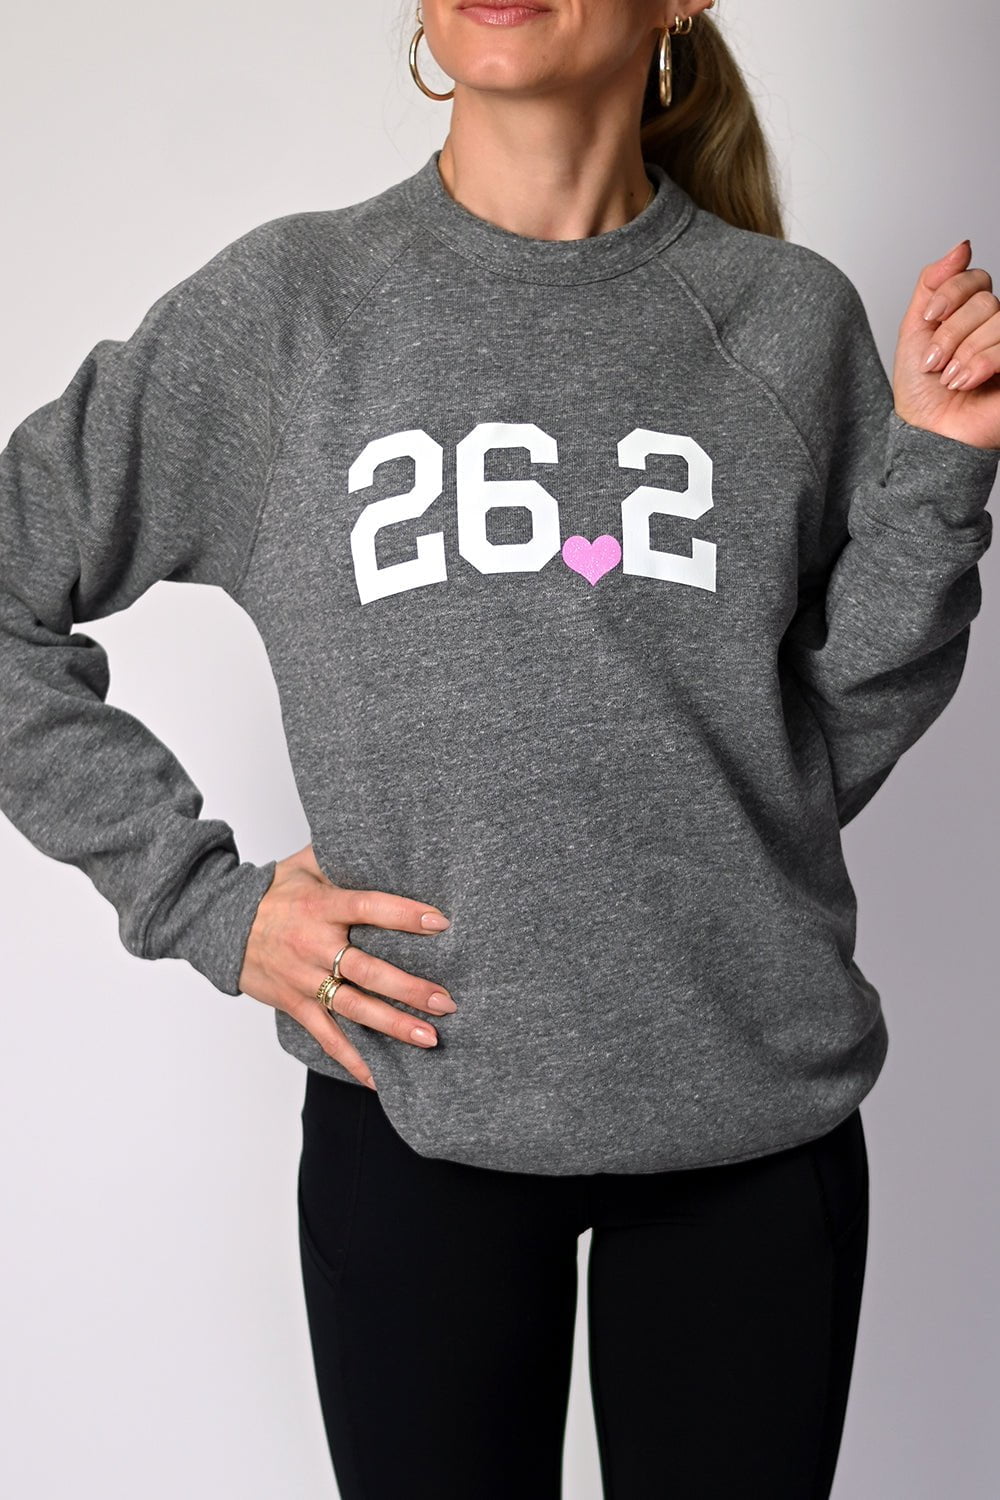 26heart2 Marathon Sweatshirt